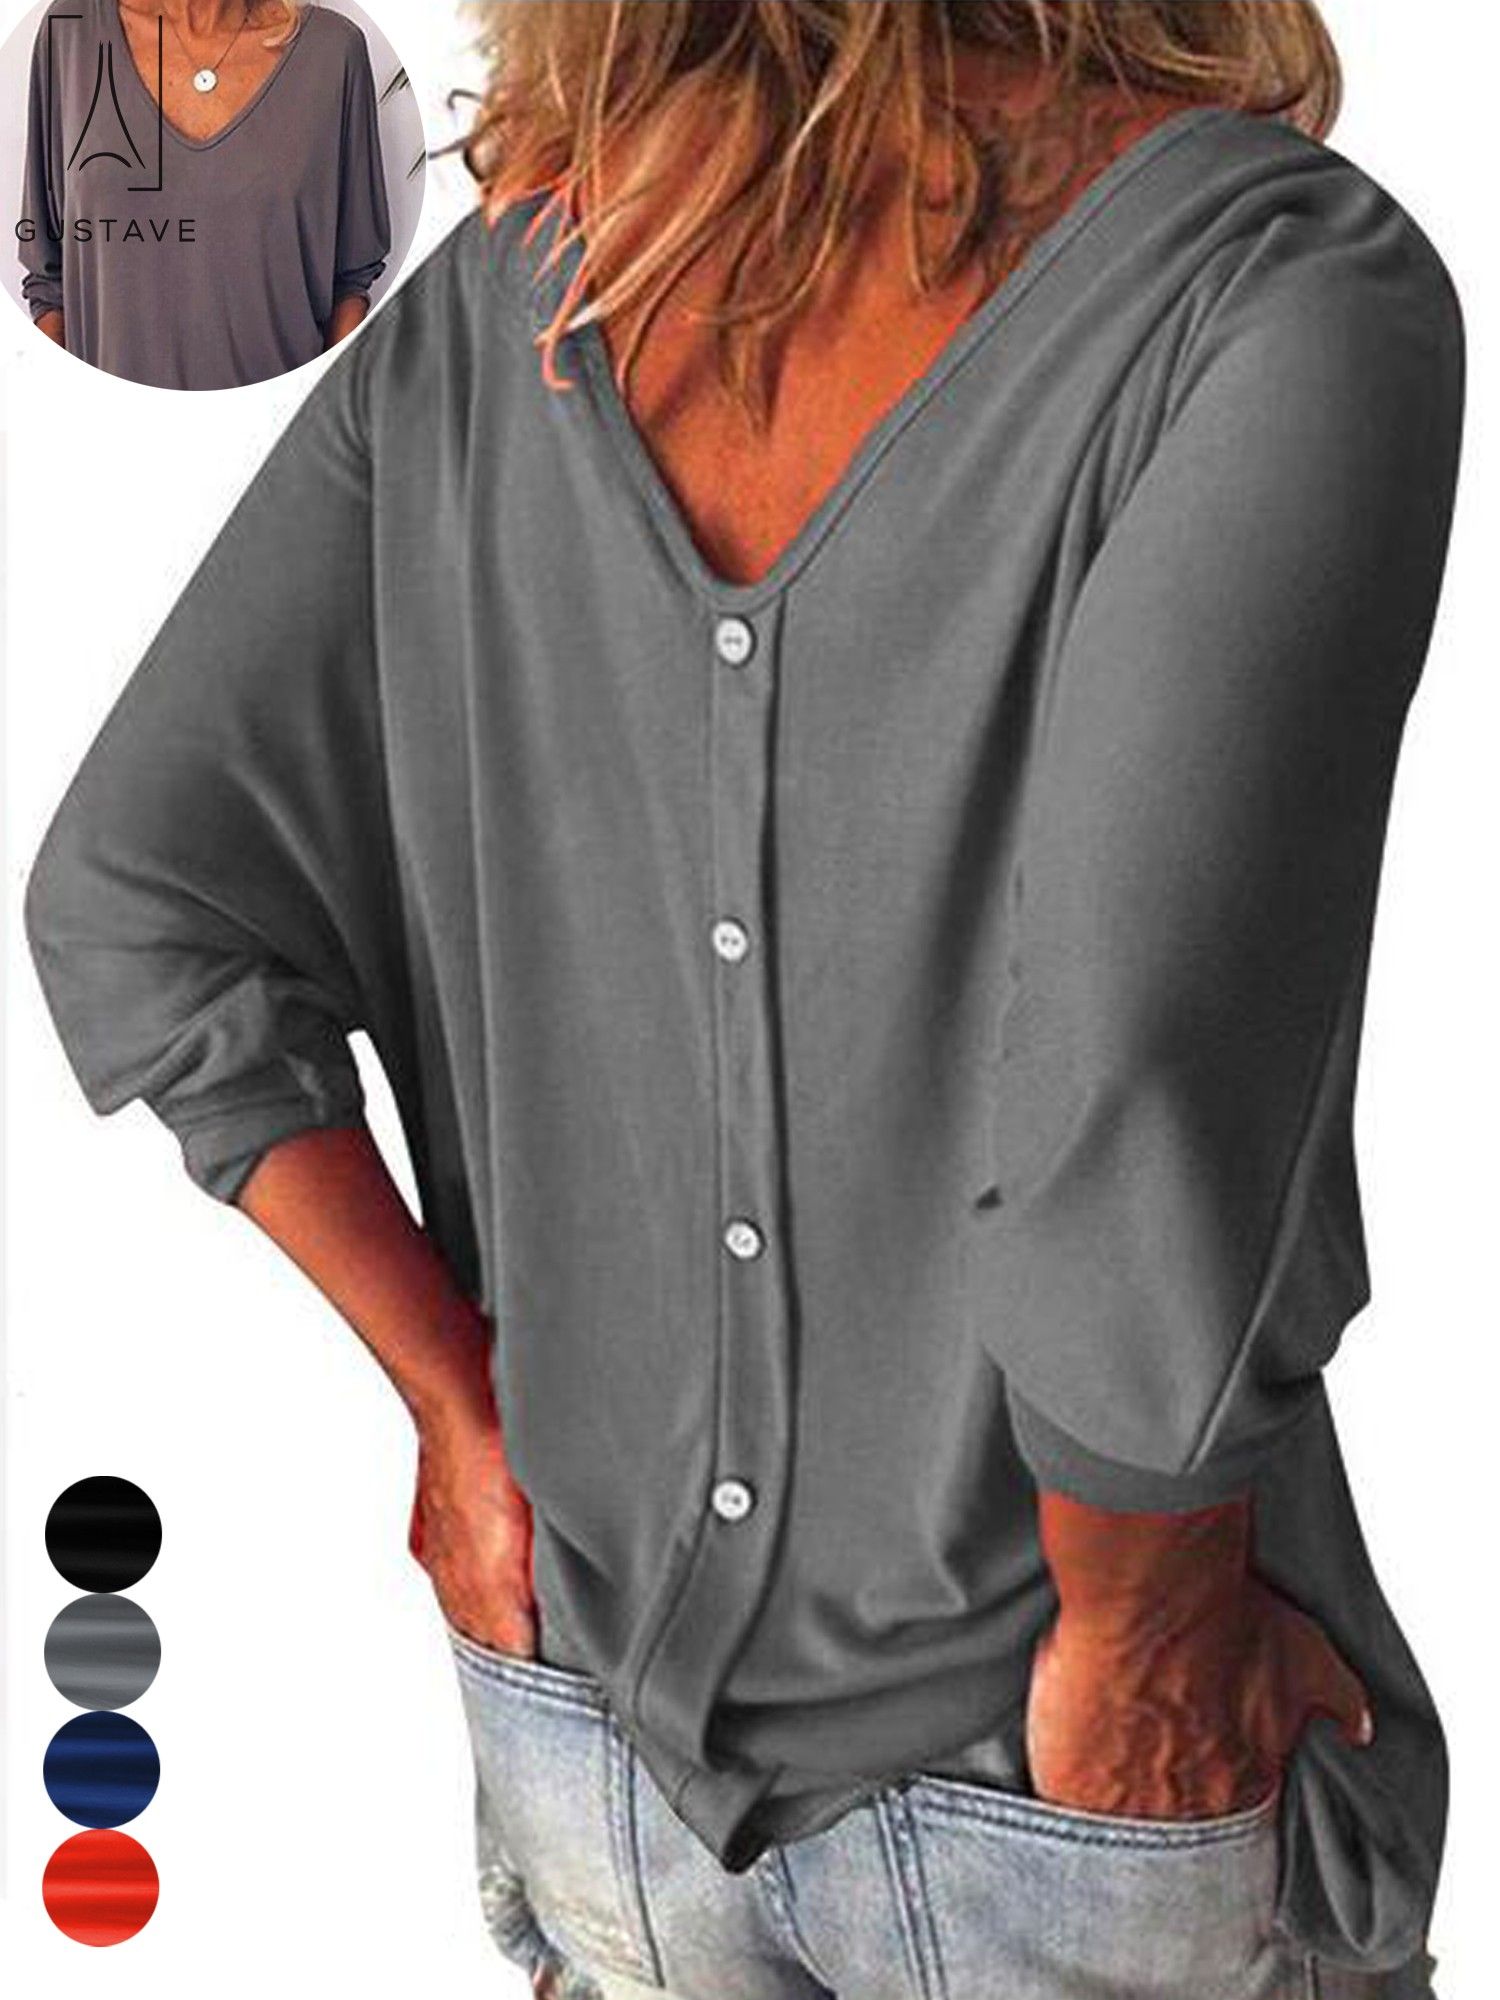 Cotton Linen Shirts for Women Summer Comfy Lightweight Casual Tops 3/4 Sleeve Button Tees Shirts 